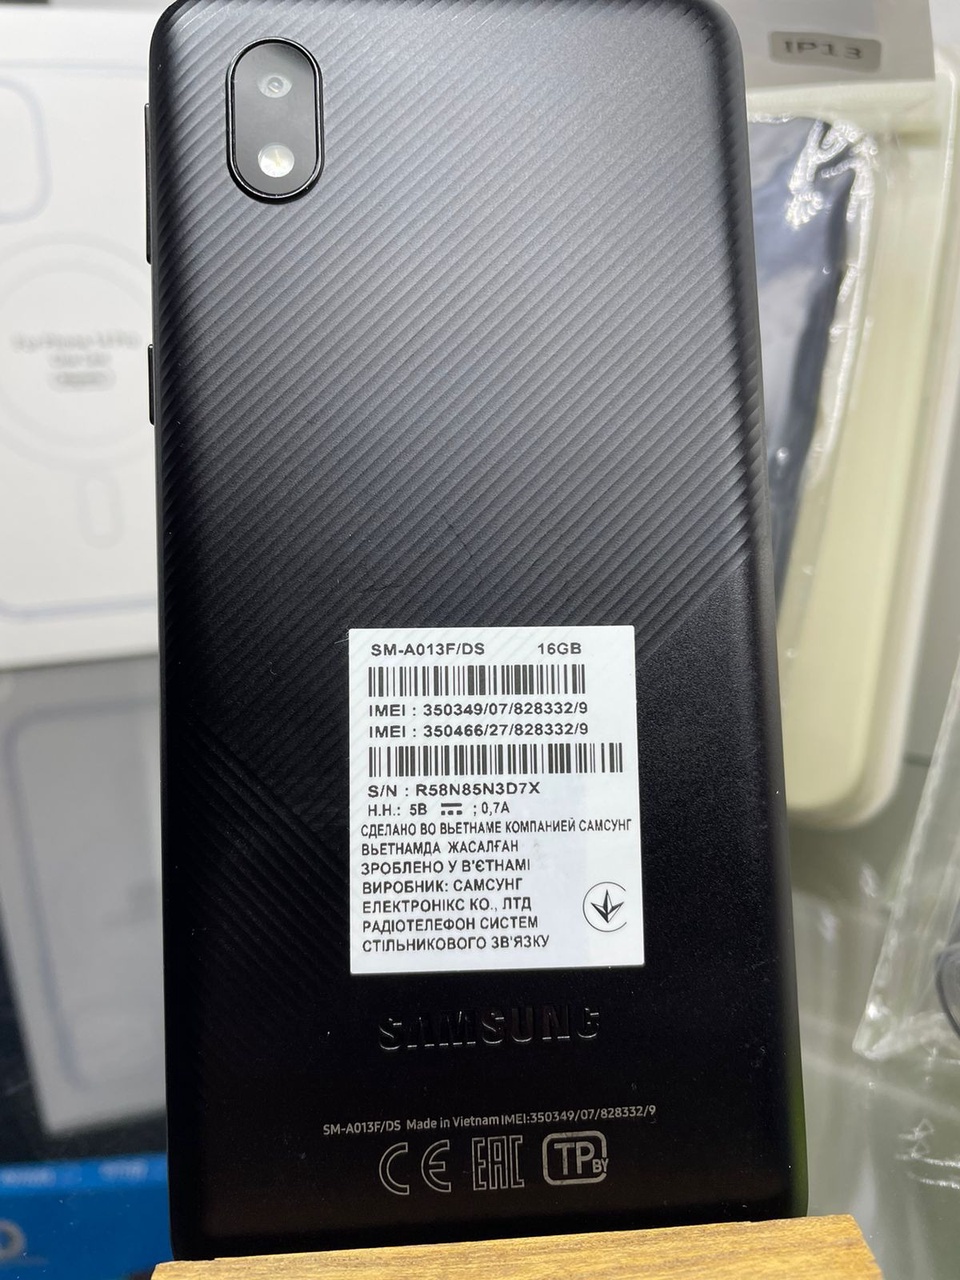 Samsung Galaxy A01 Core на 16 Gb - 2 990 ₽, заказать онлайн.